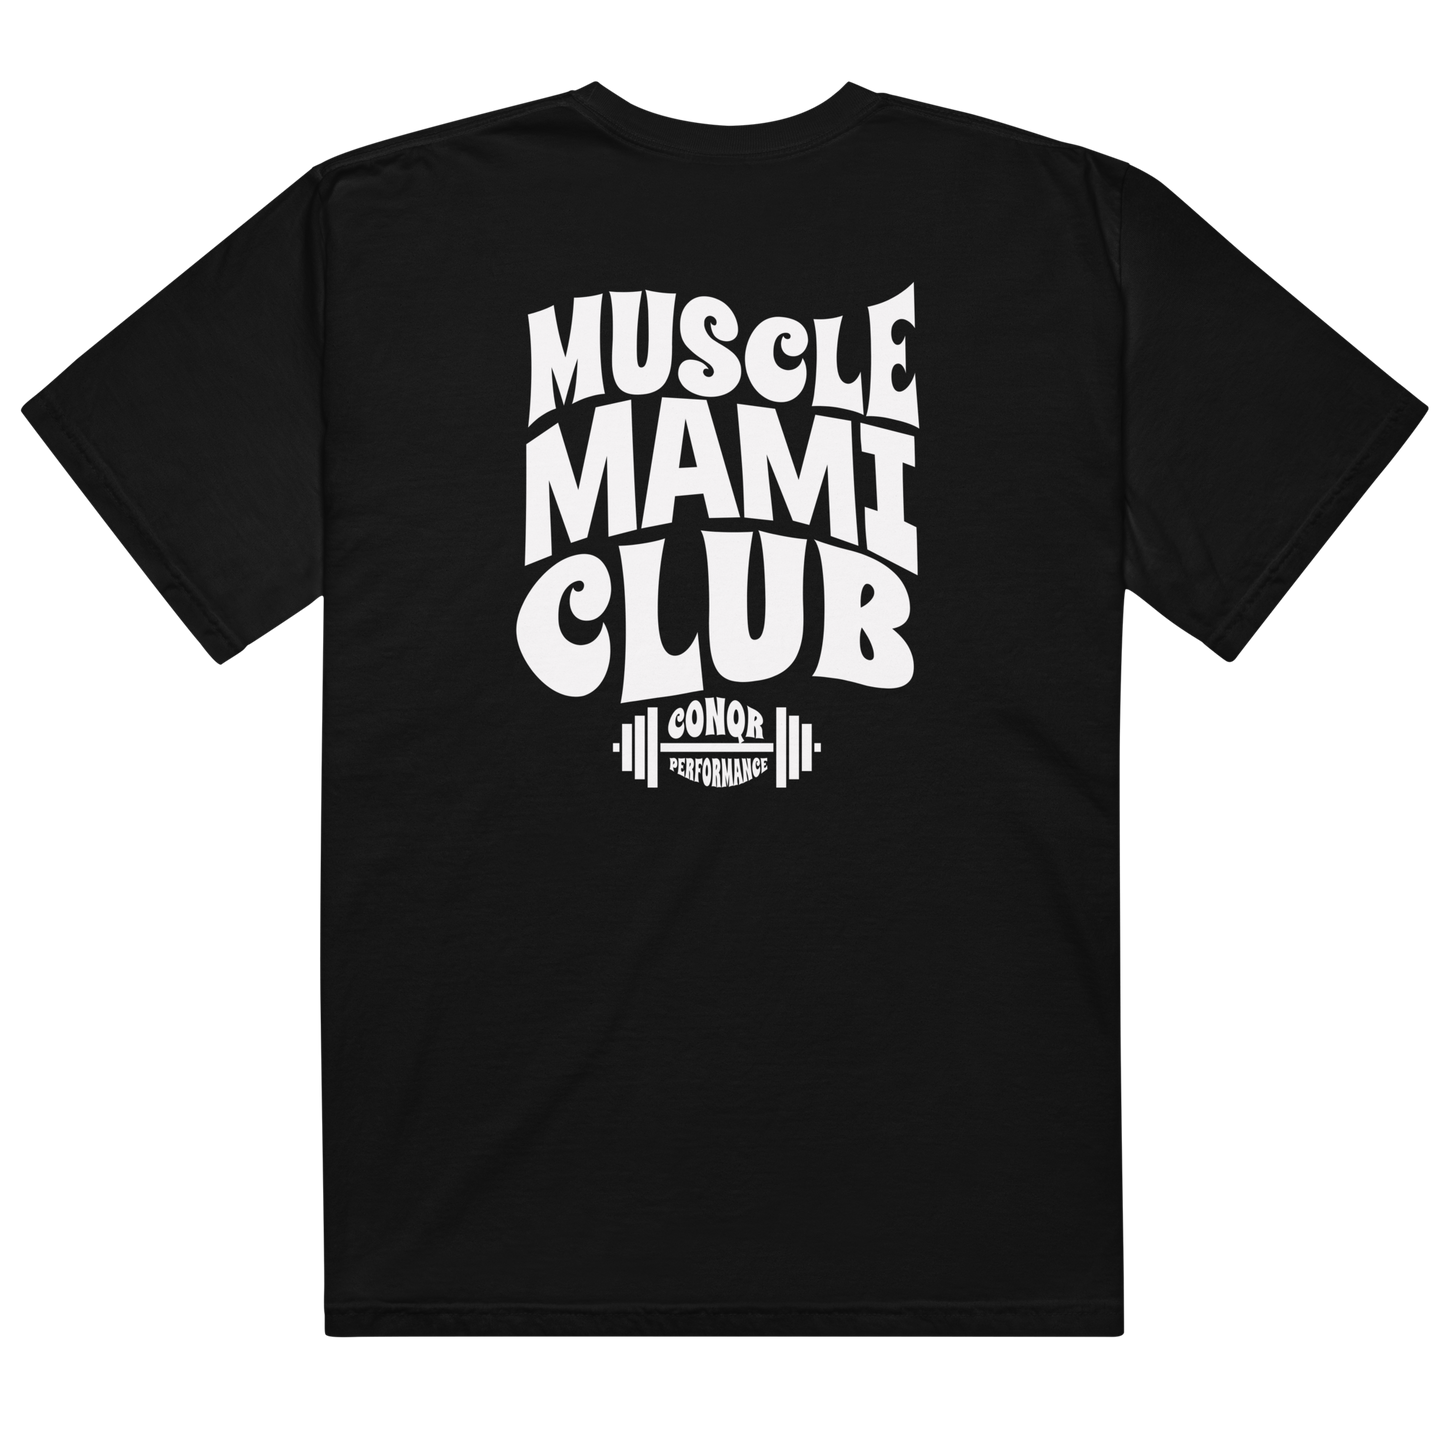 Muscle Mami Club heavyweight pump cover